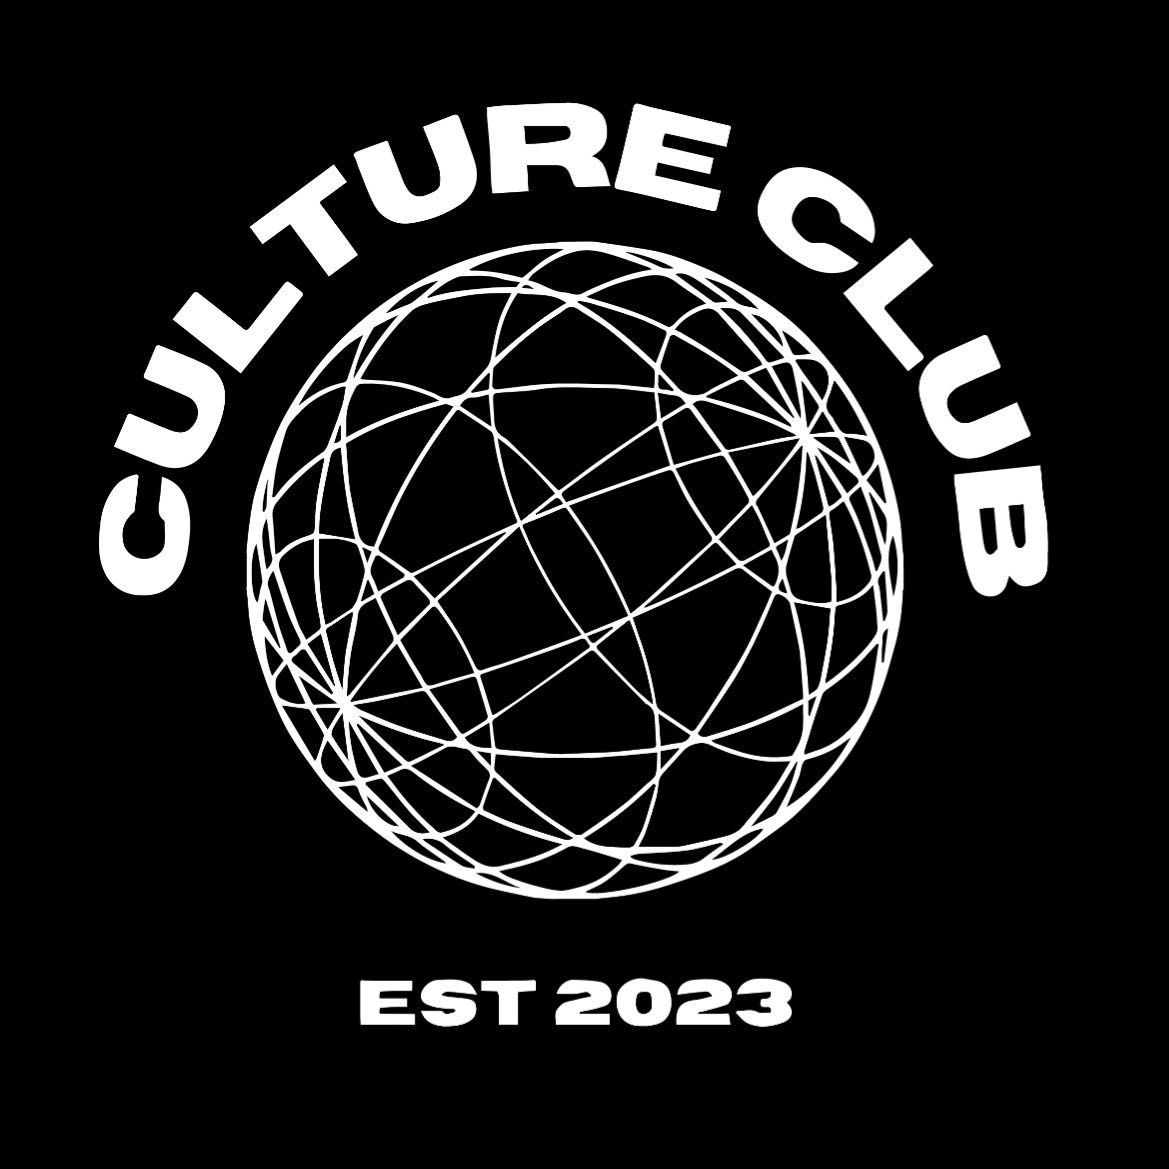 Culture Club arthouse, 507 Danbury Rd, New Milford, 06776